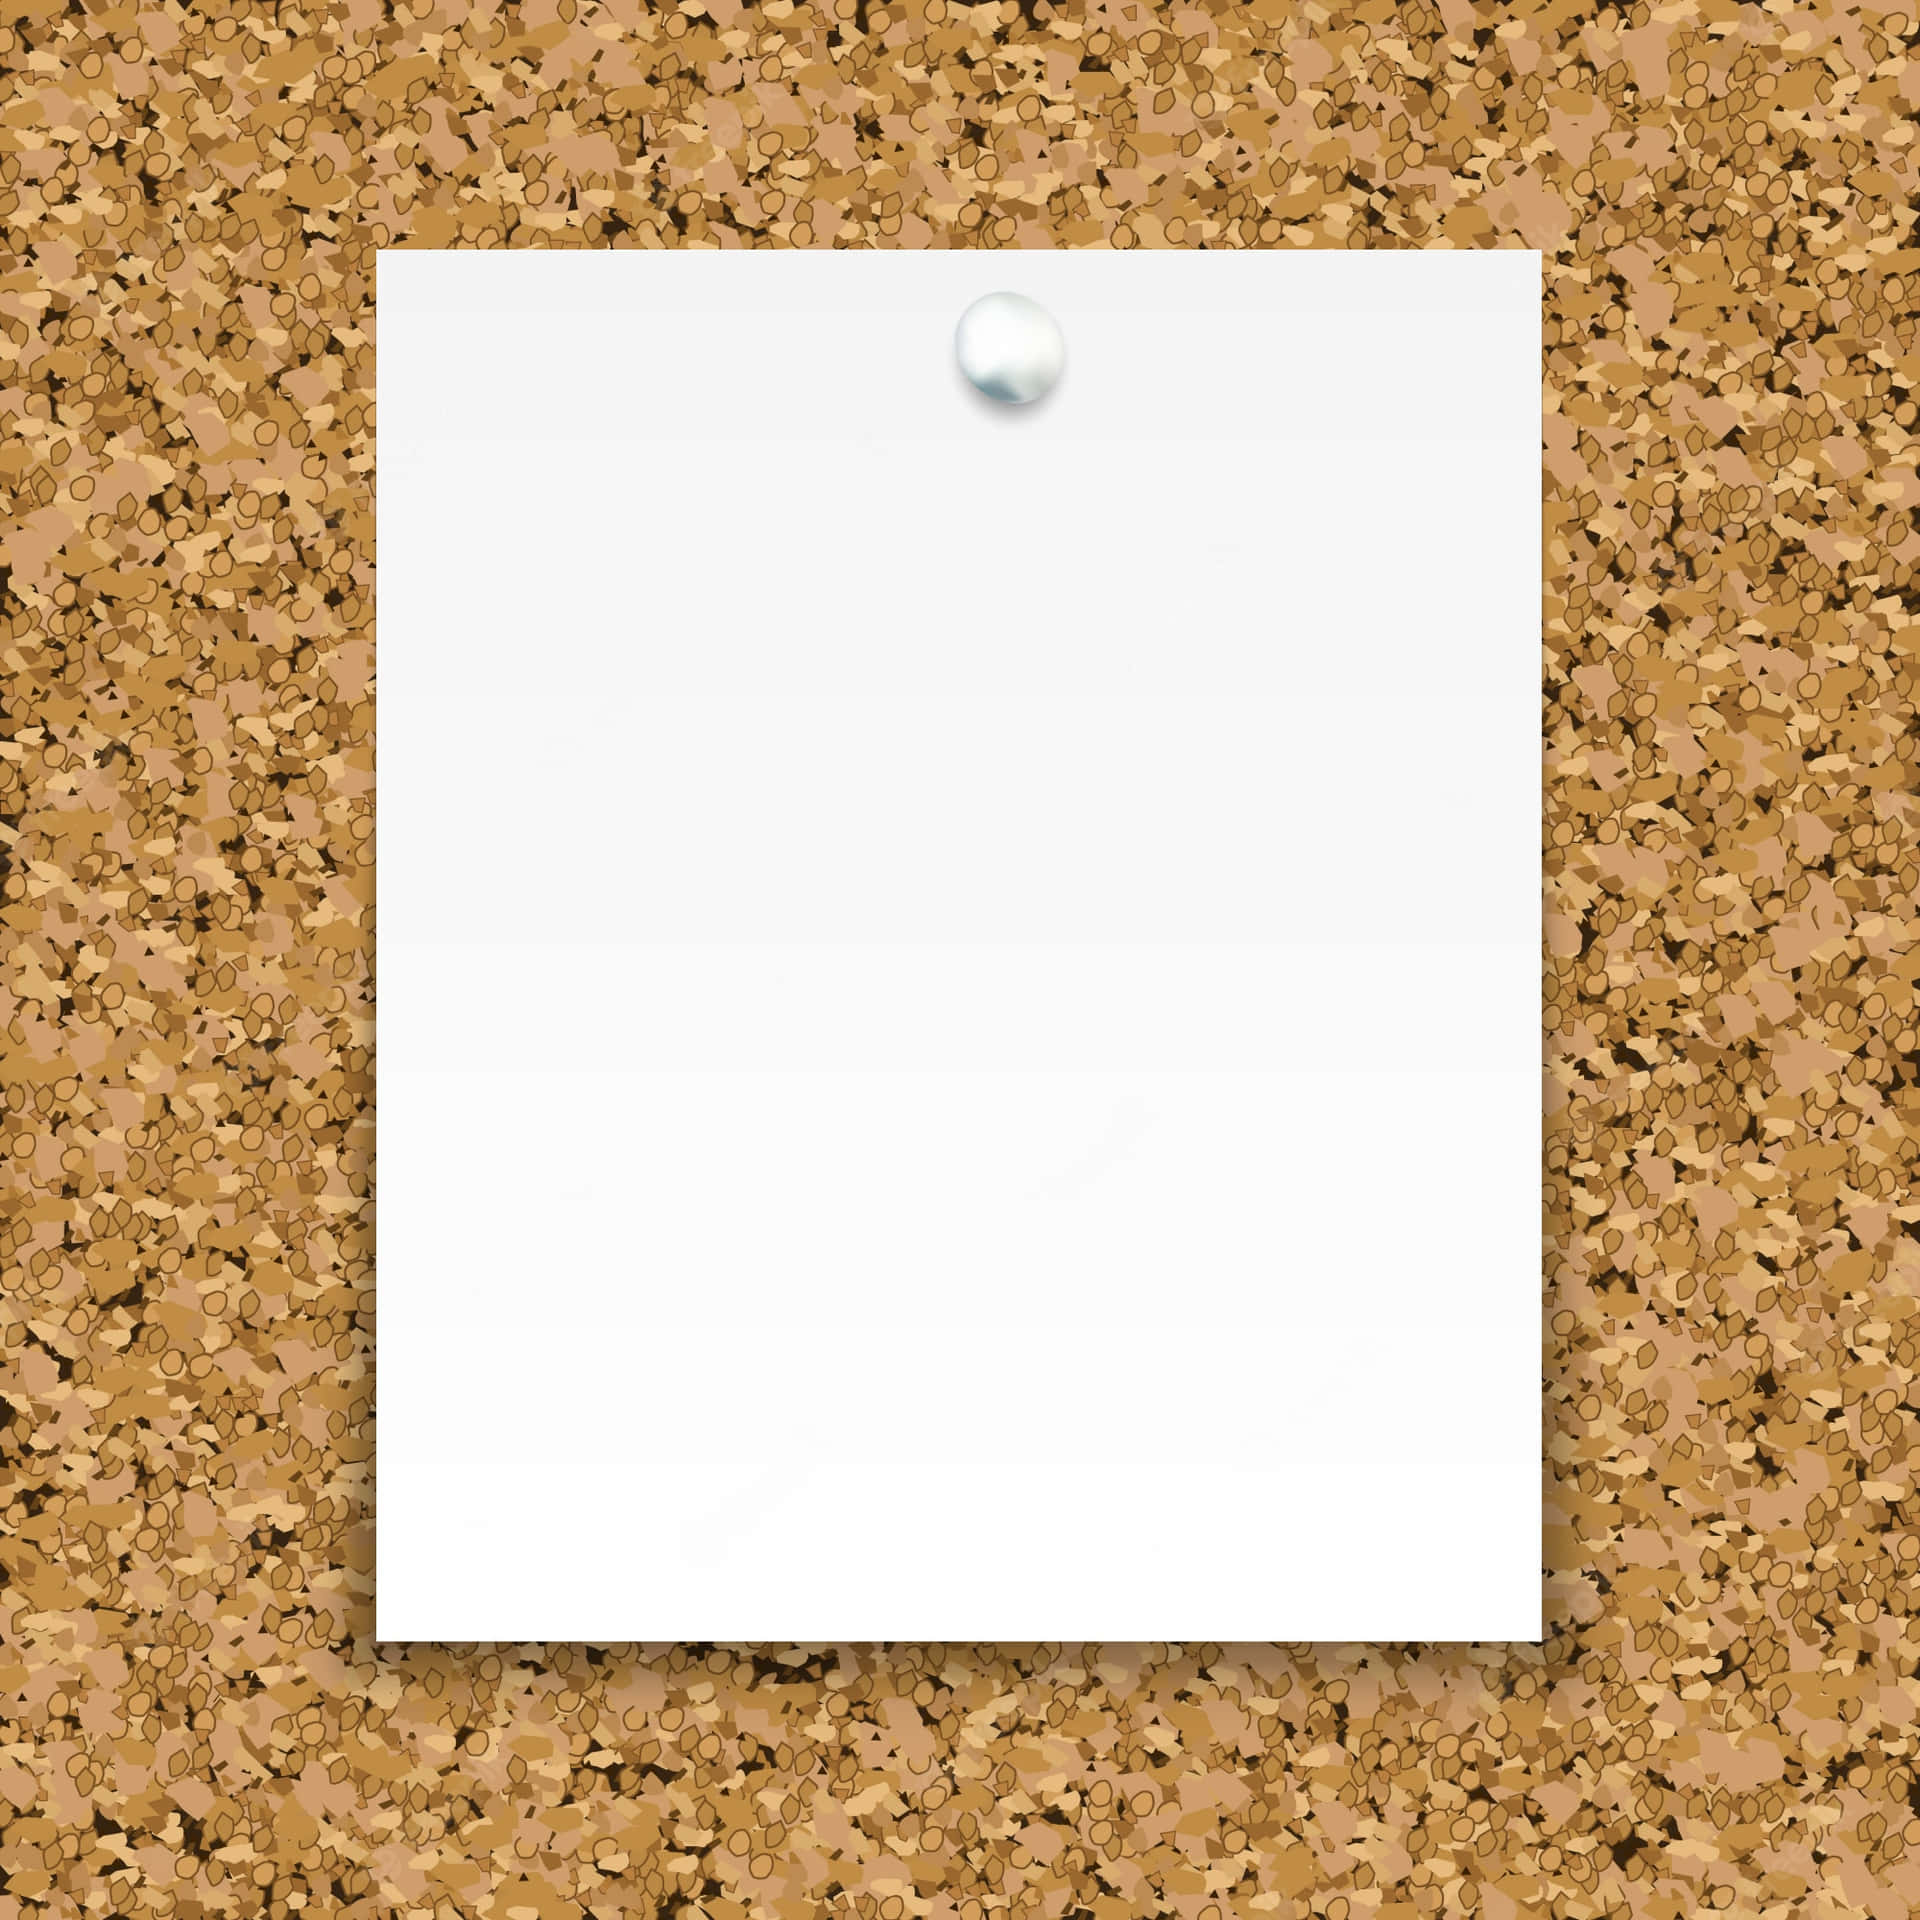 A White Paper On A Corkboard